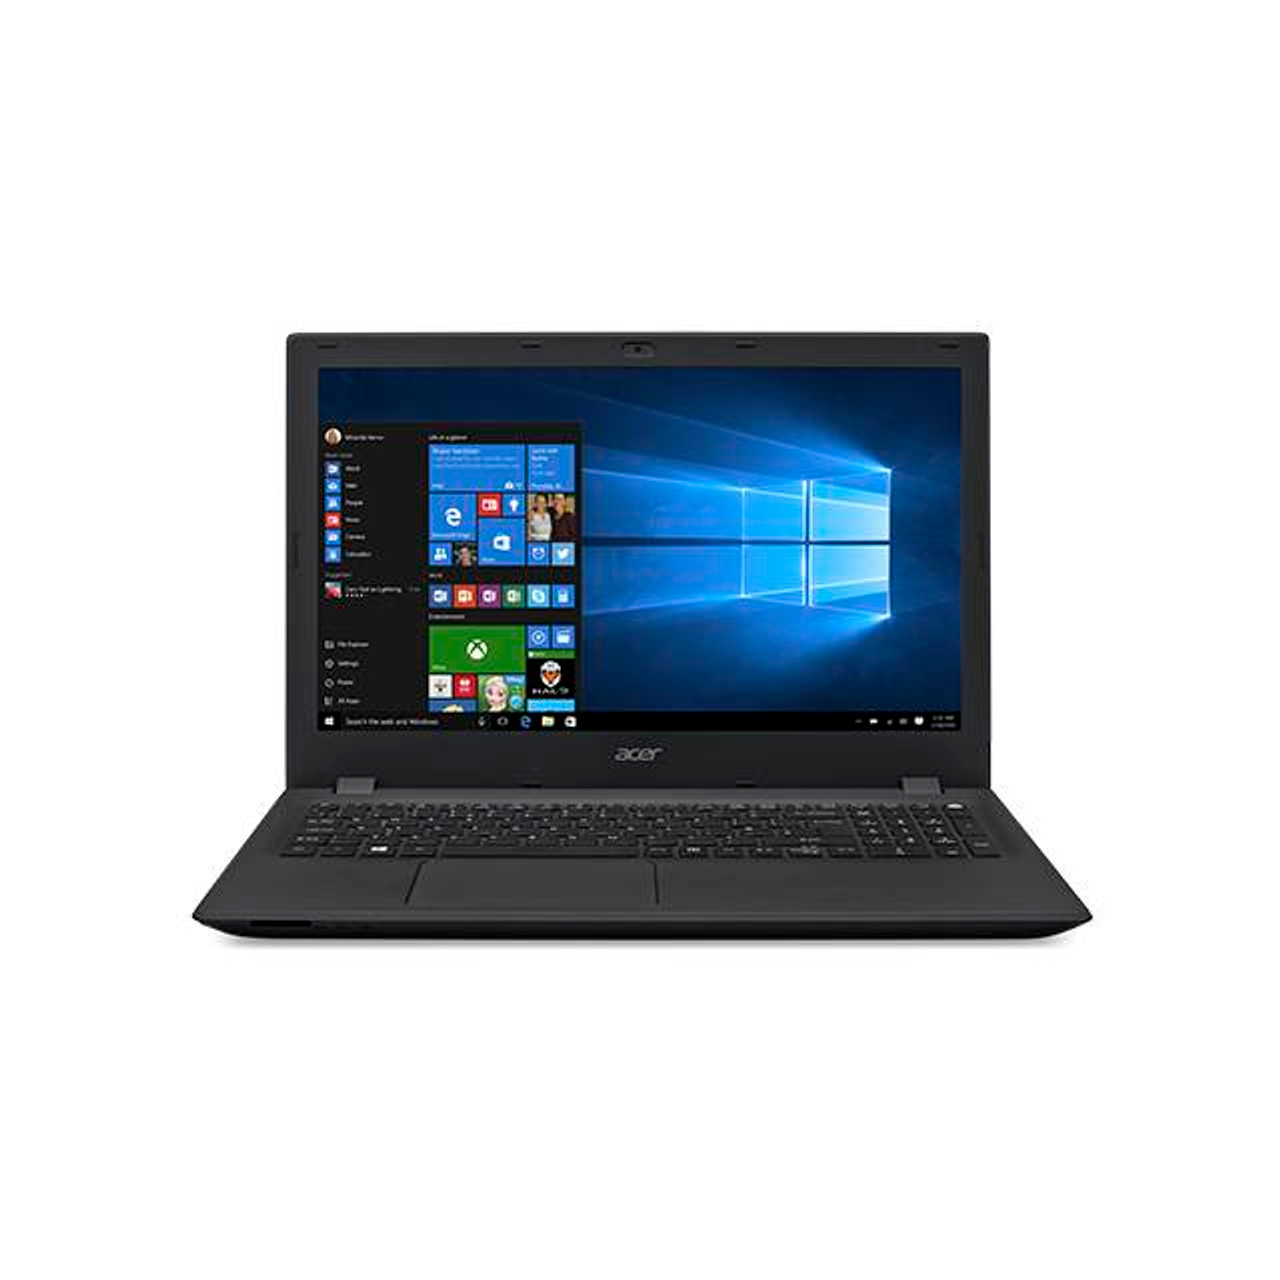 Acer TravelMate P2 TMP258-M-716Z 15.6 inch Intel Core i7-6500U 2.5GHz/ 8GB DDR3L/ 500GB HDD/ DVD±RW/ USB3.0/ Windows 7 Professional or Windows 10 Pro Notebook (Black)